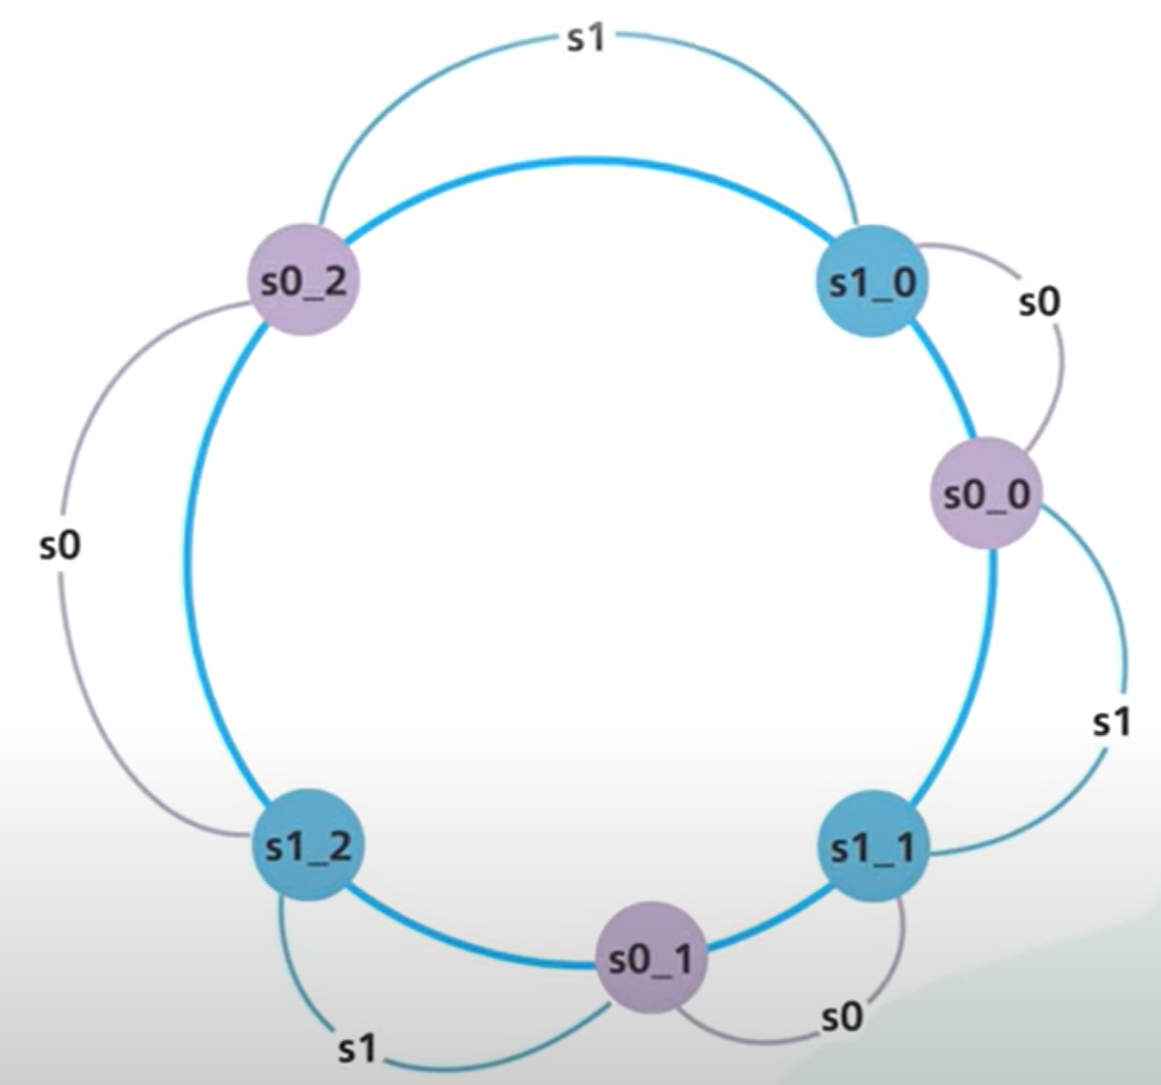 A diagram depicting how each server handles multiple segments on the ring via virtual nodes